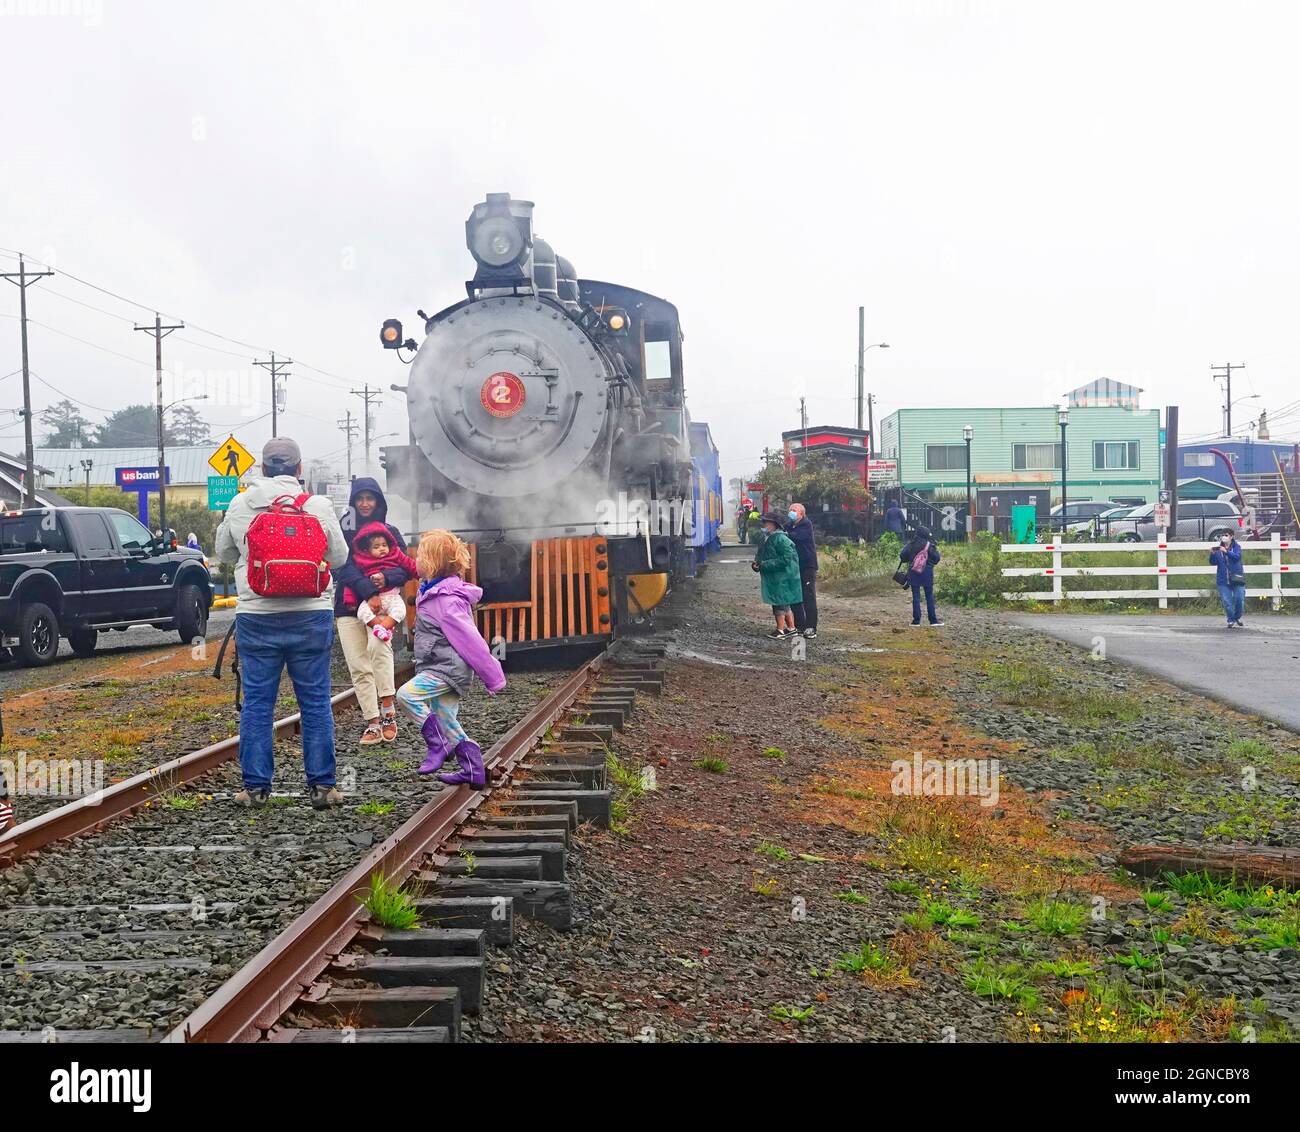 A historic steam engine belonging to the Oregon Coast Scenic Railroads in Garibaldi, Oregon. The train operates between Garibaldi and Rockaway Beach, Oregon. Stock Photo